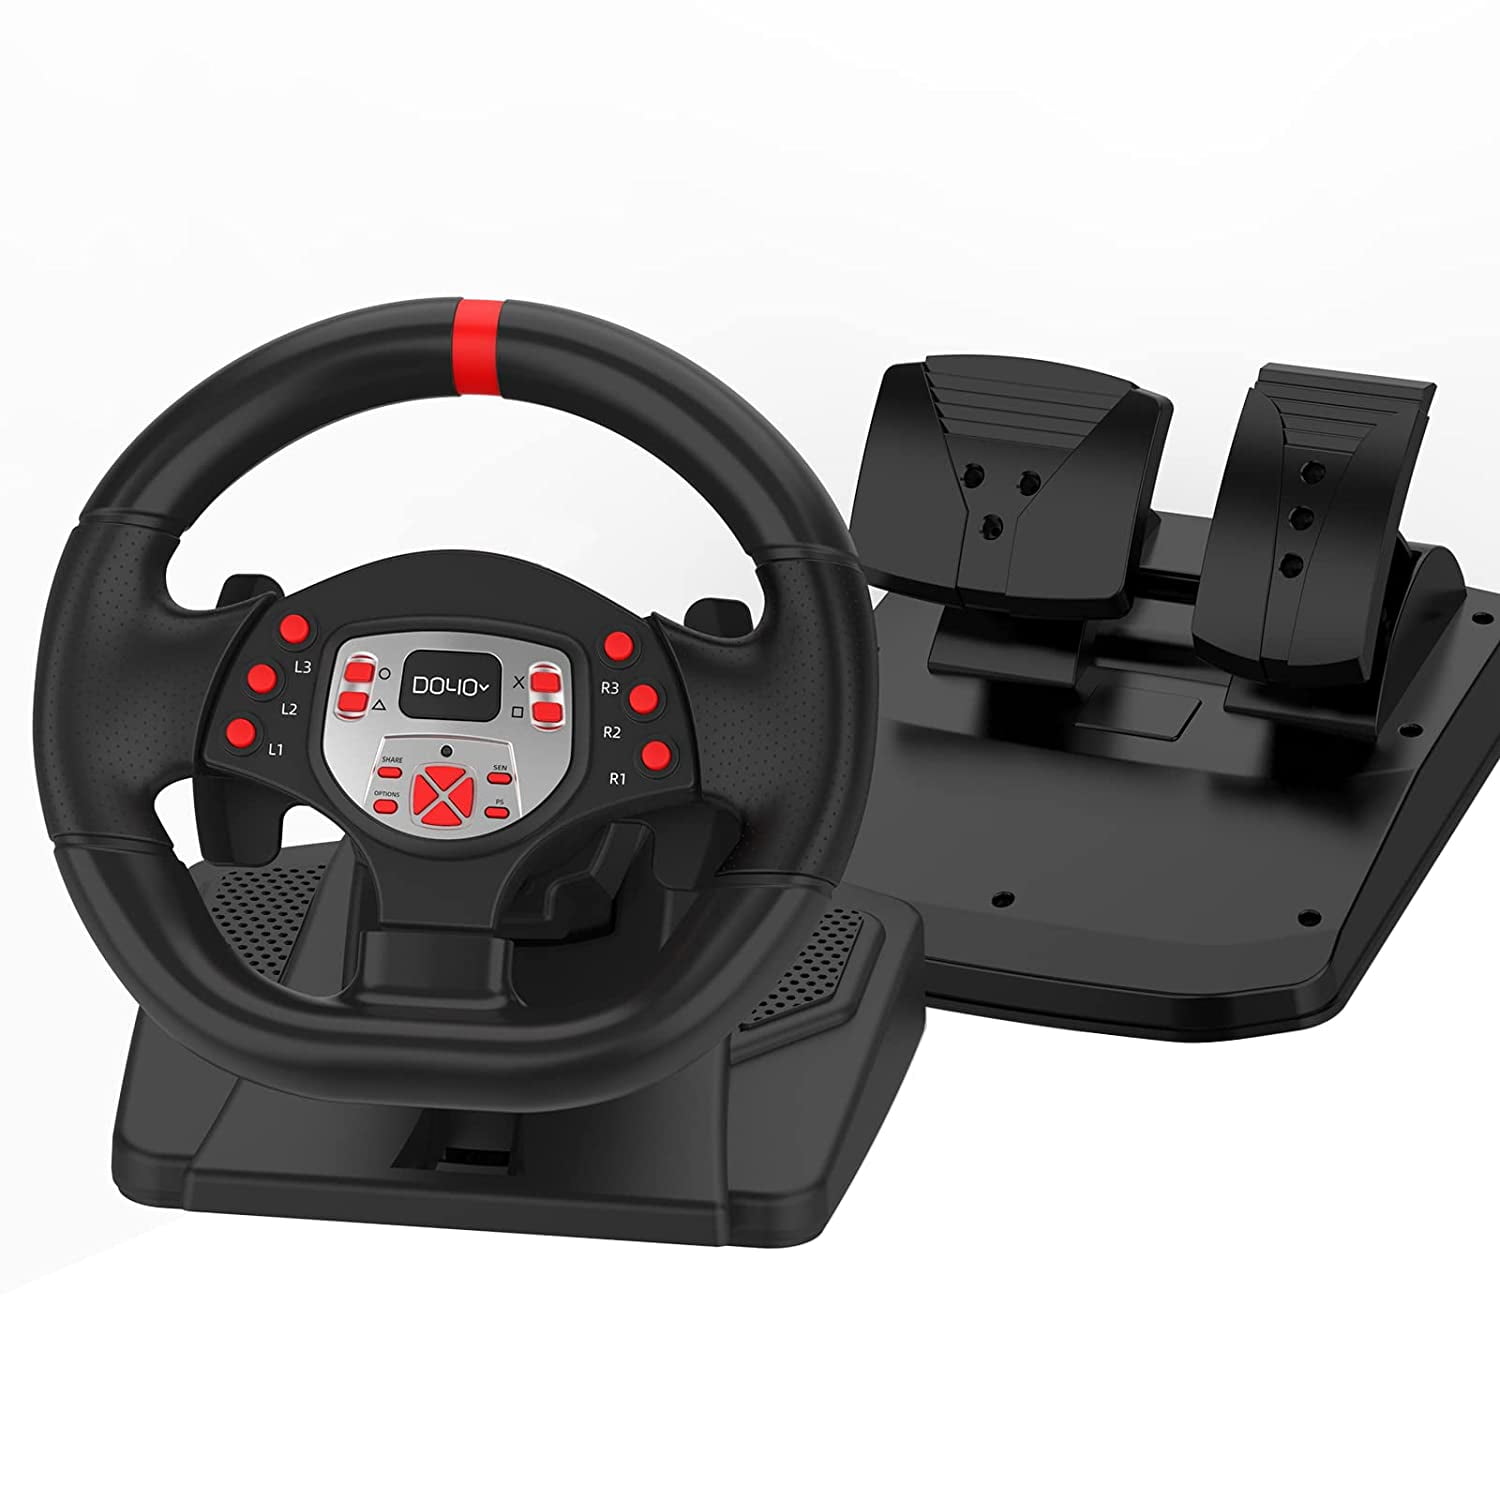 VOLANTE LOGITECH G29 PEDALERA DRIVING FORCE RACINGWHEEL PS3 / PS4